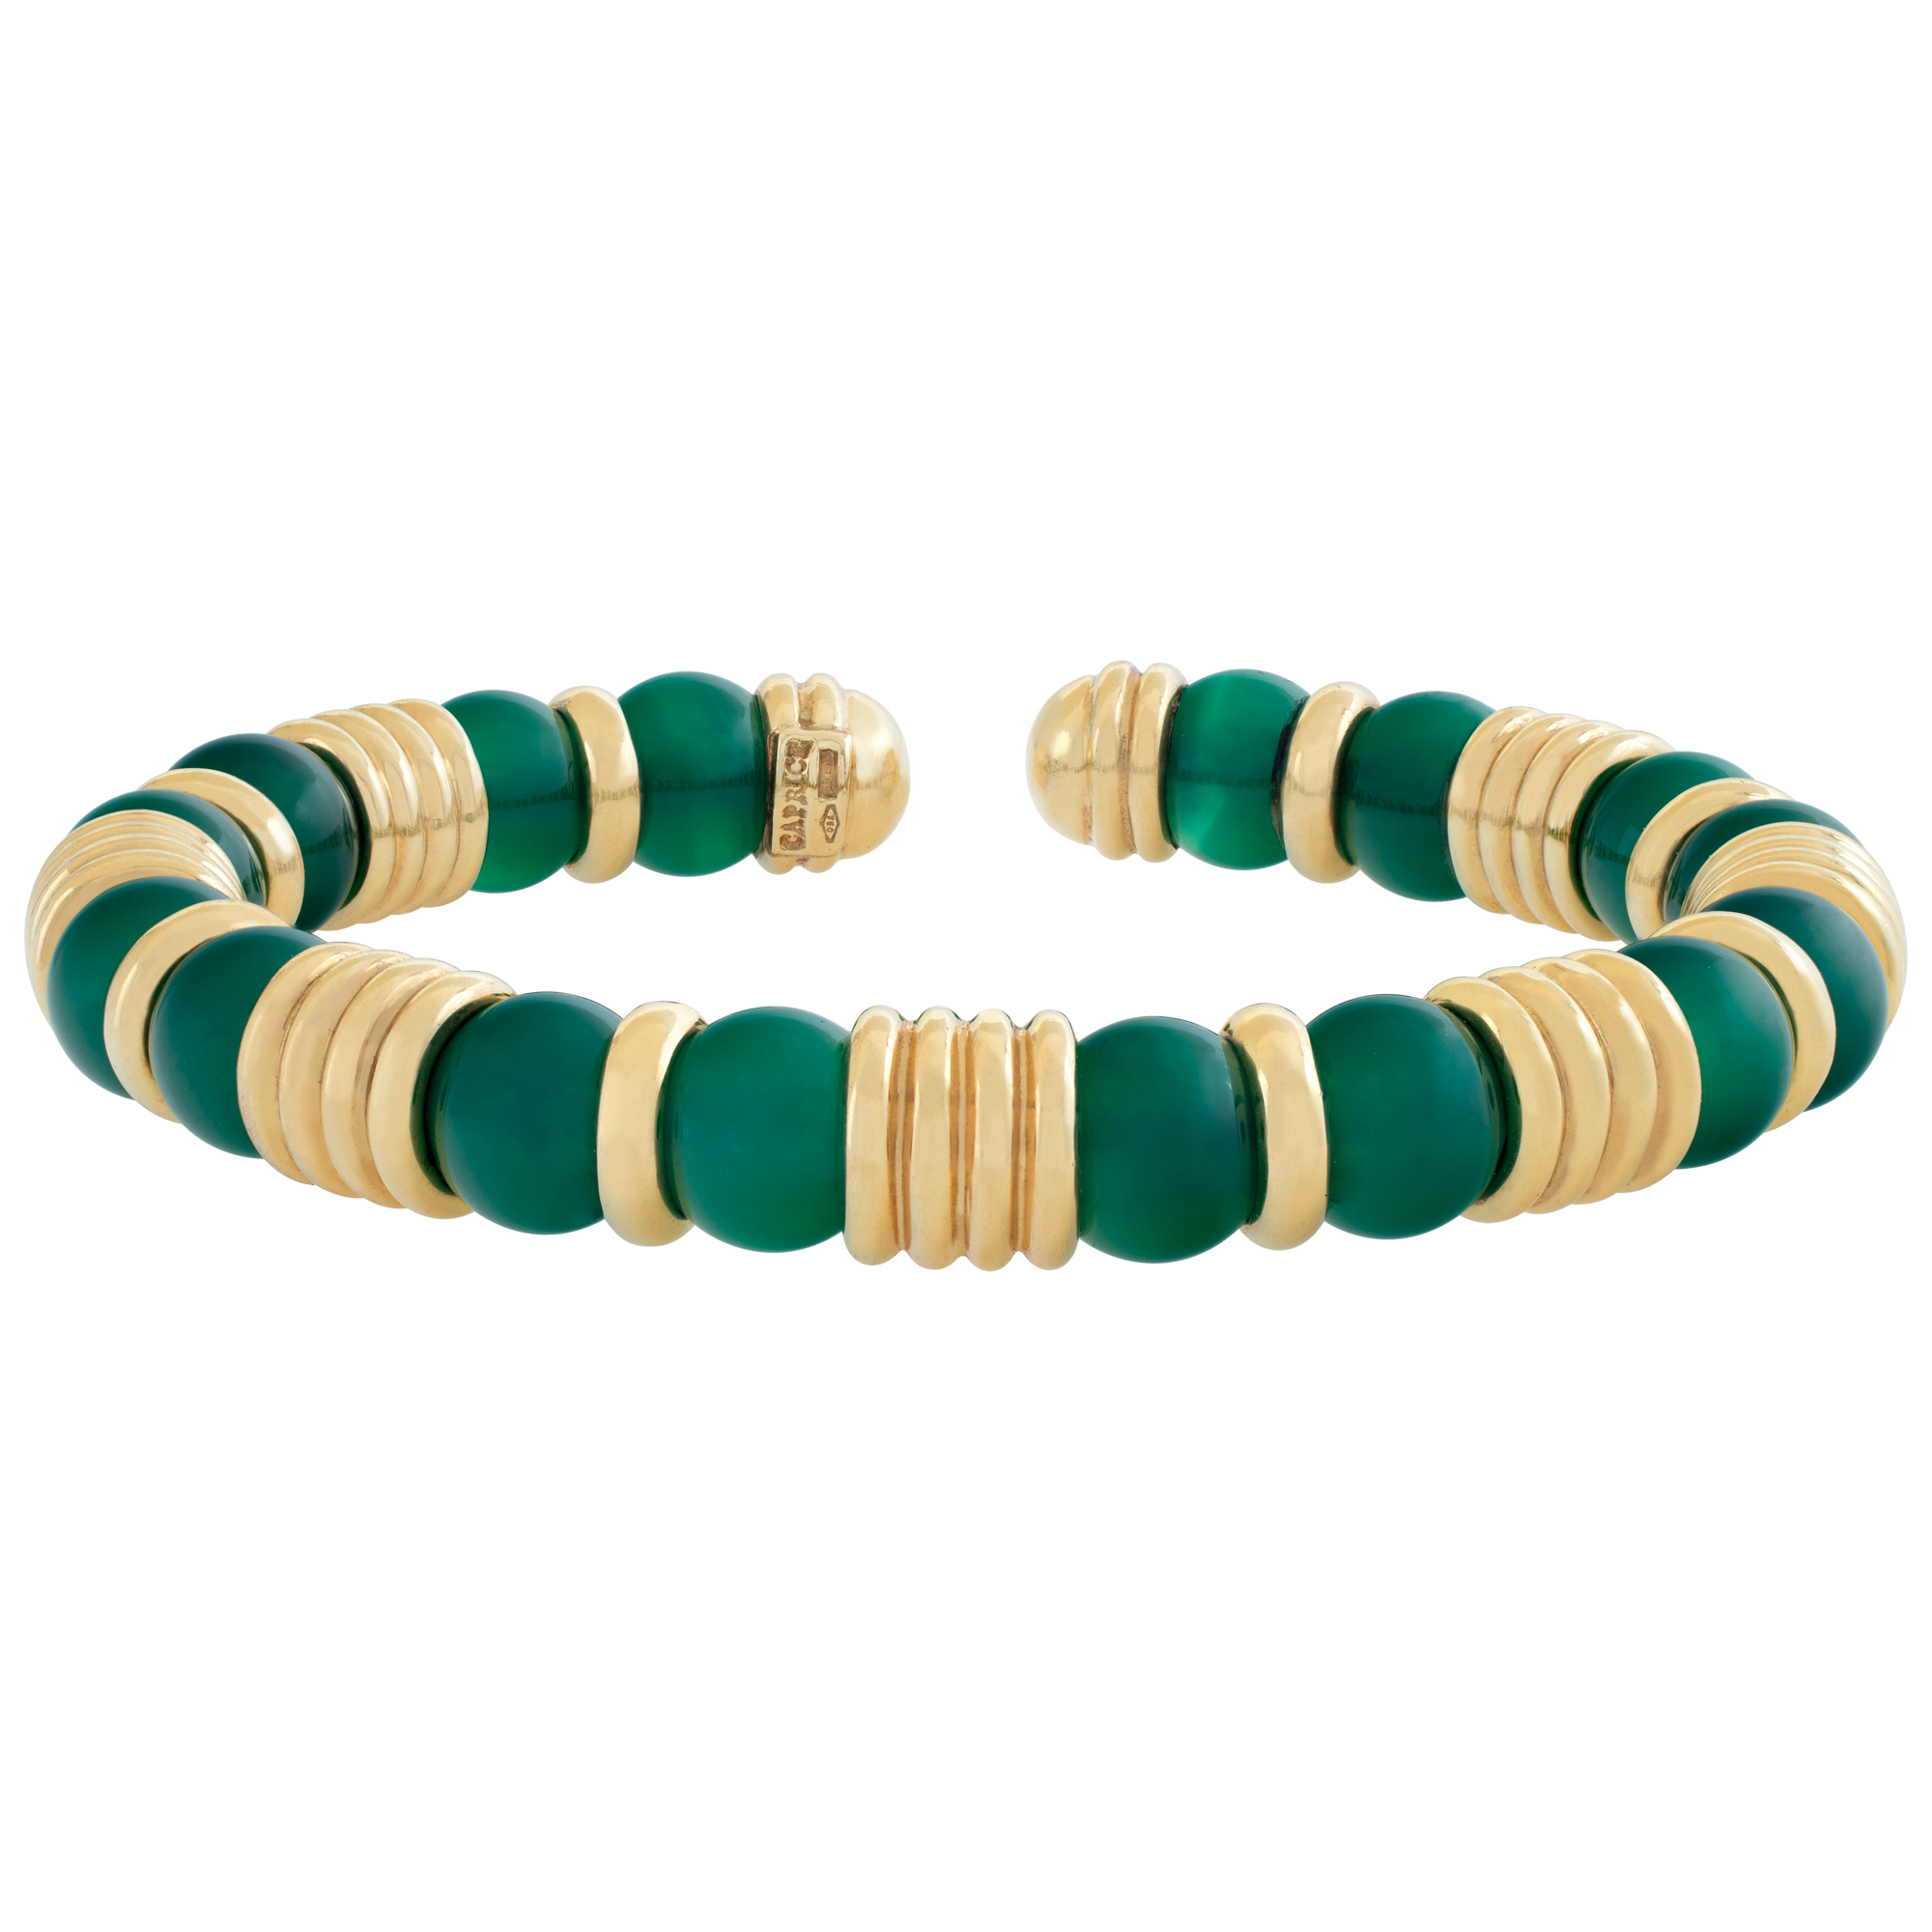 Caprice jade bracelet in 18k fits up to 5- 6.5 inch wrist